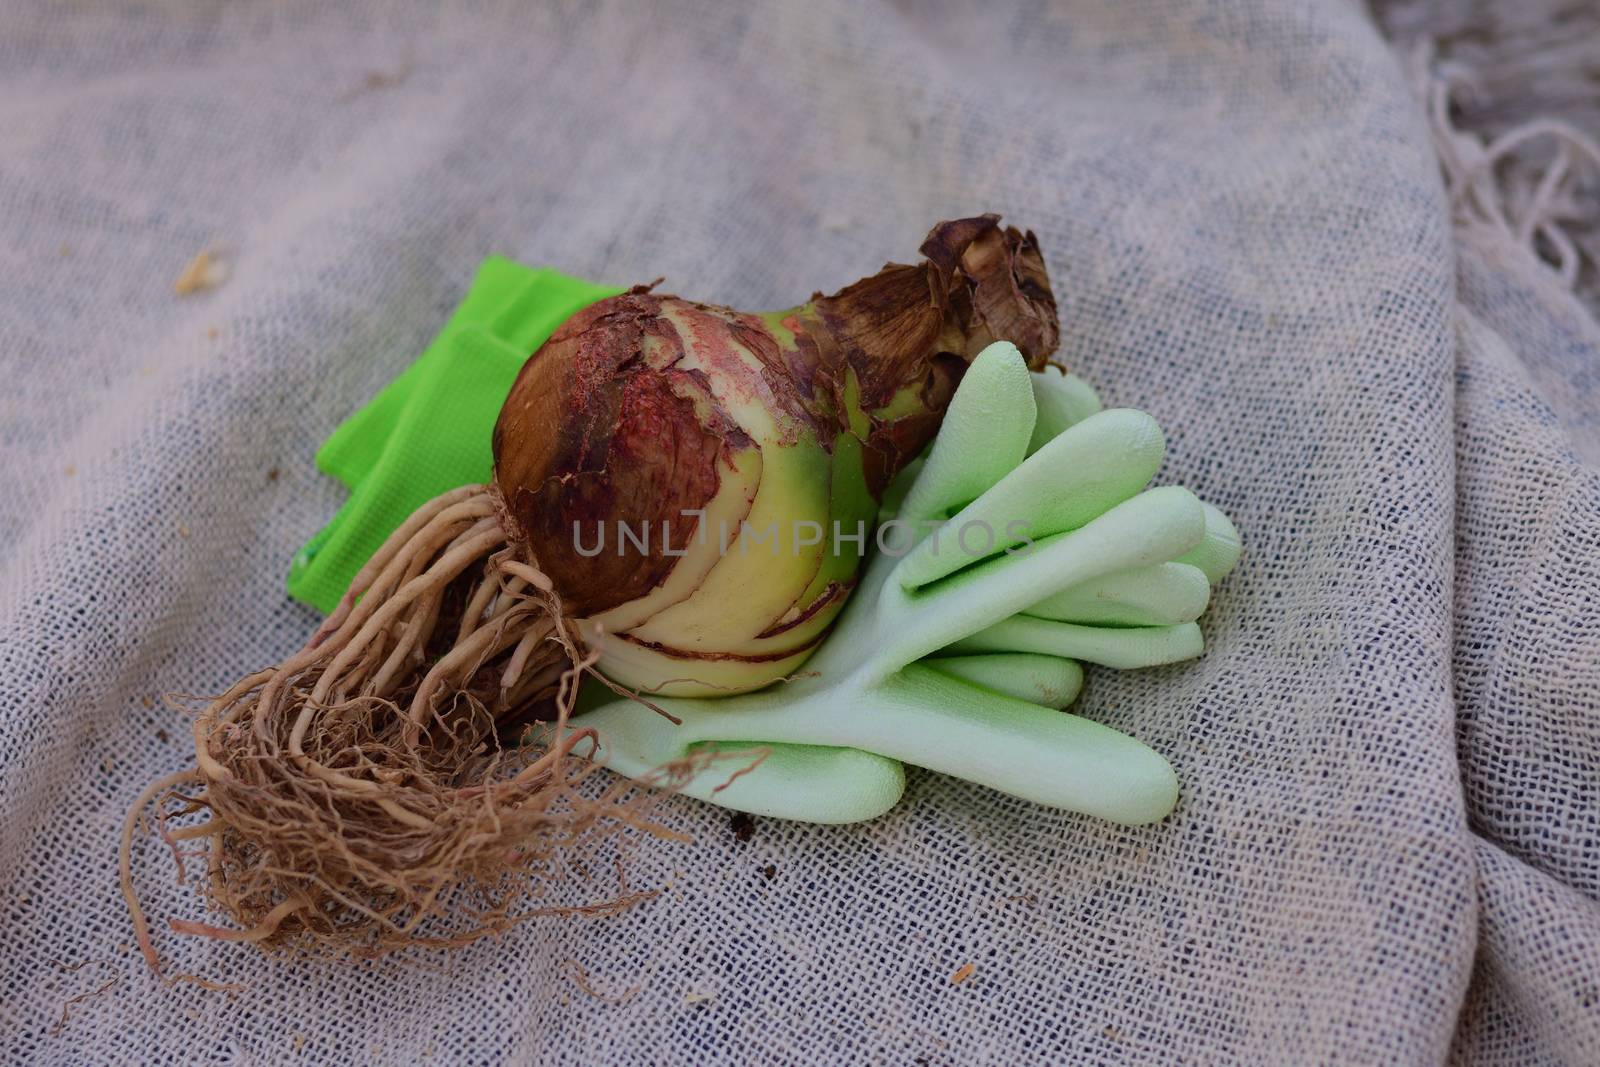 premium quality Amaryllis (Hippeastrum) bulb and garden accessories